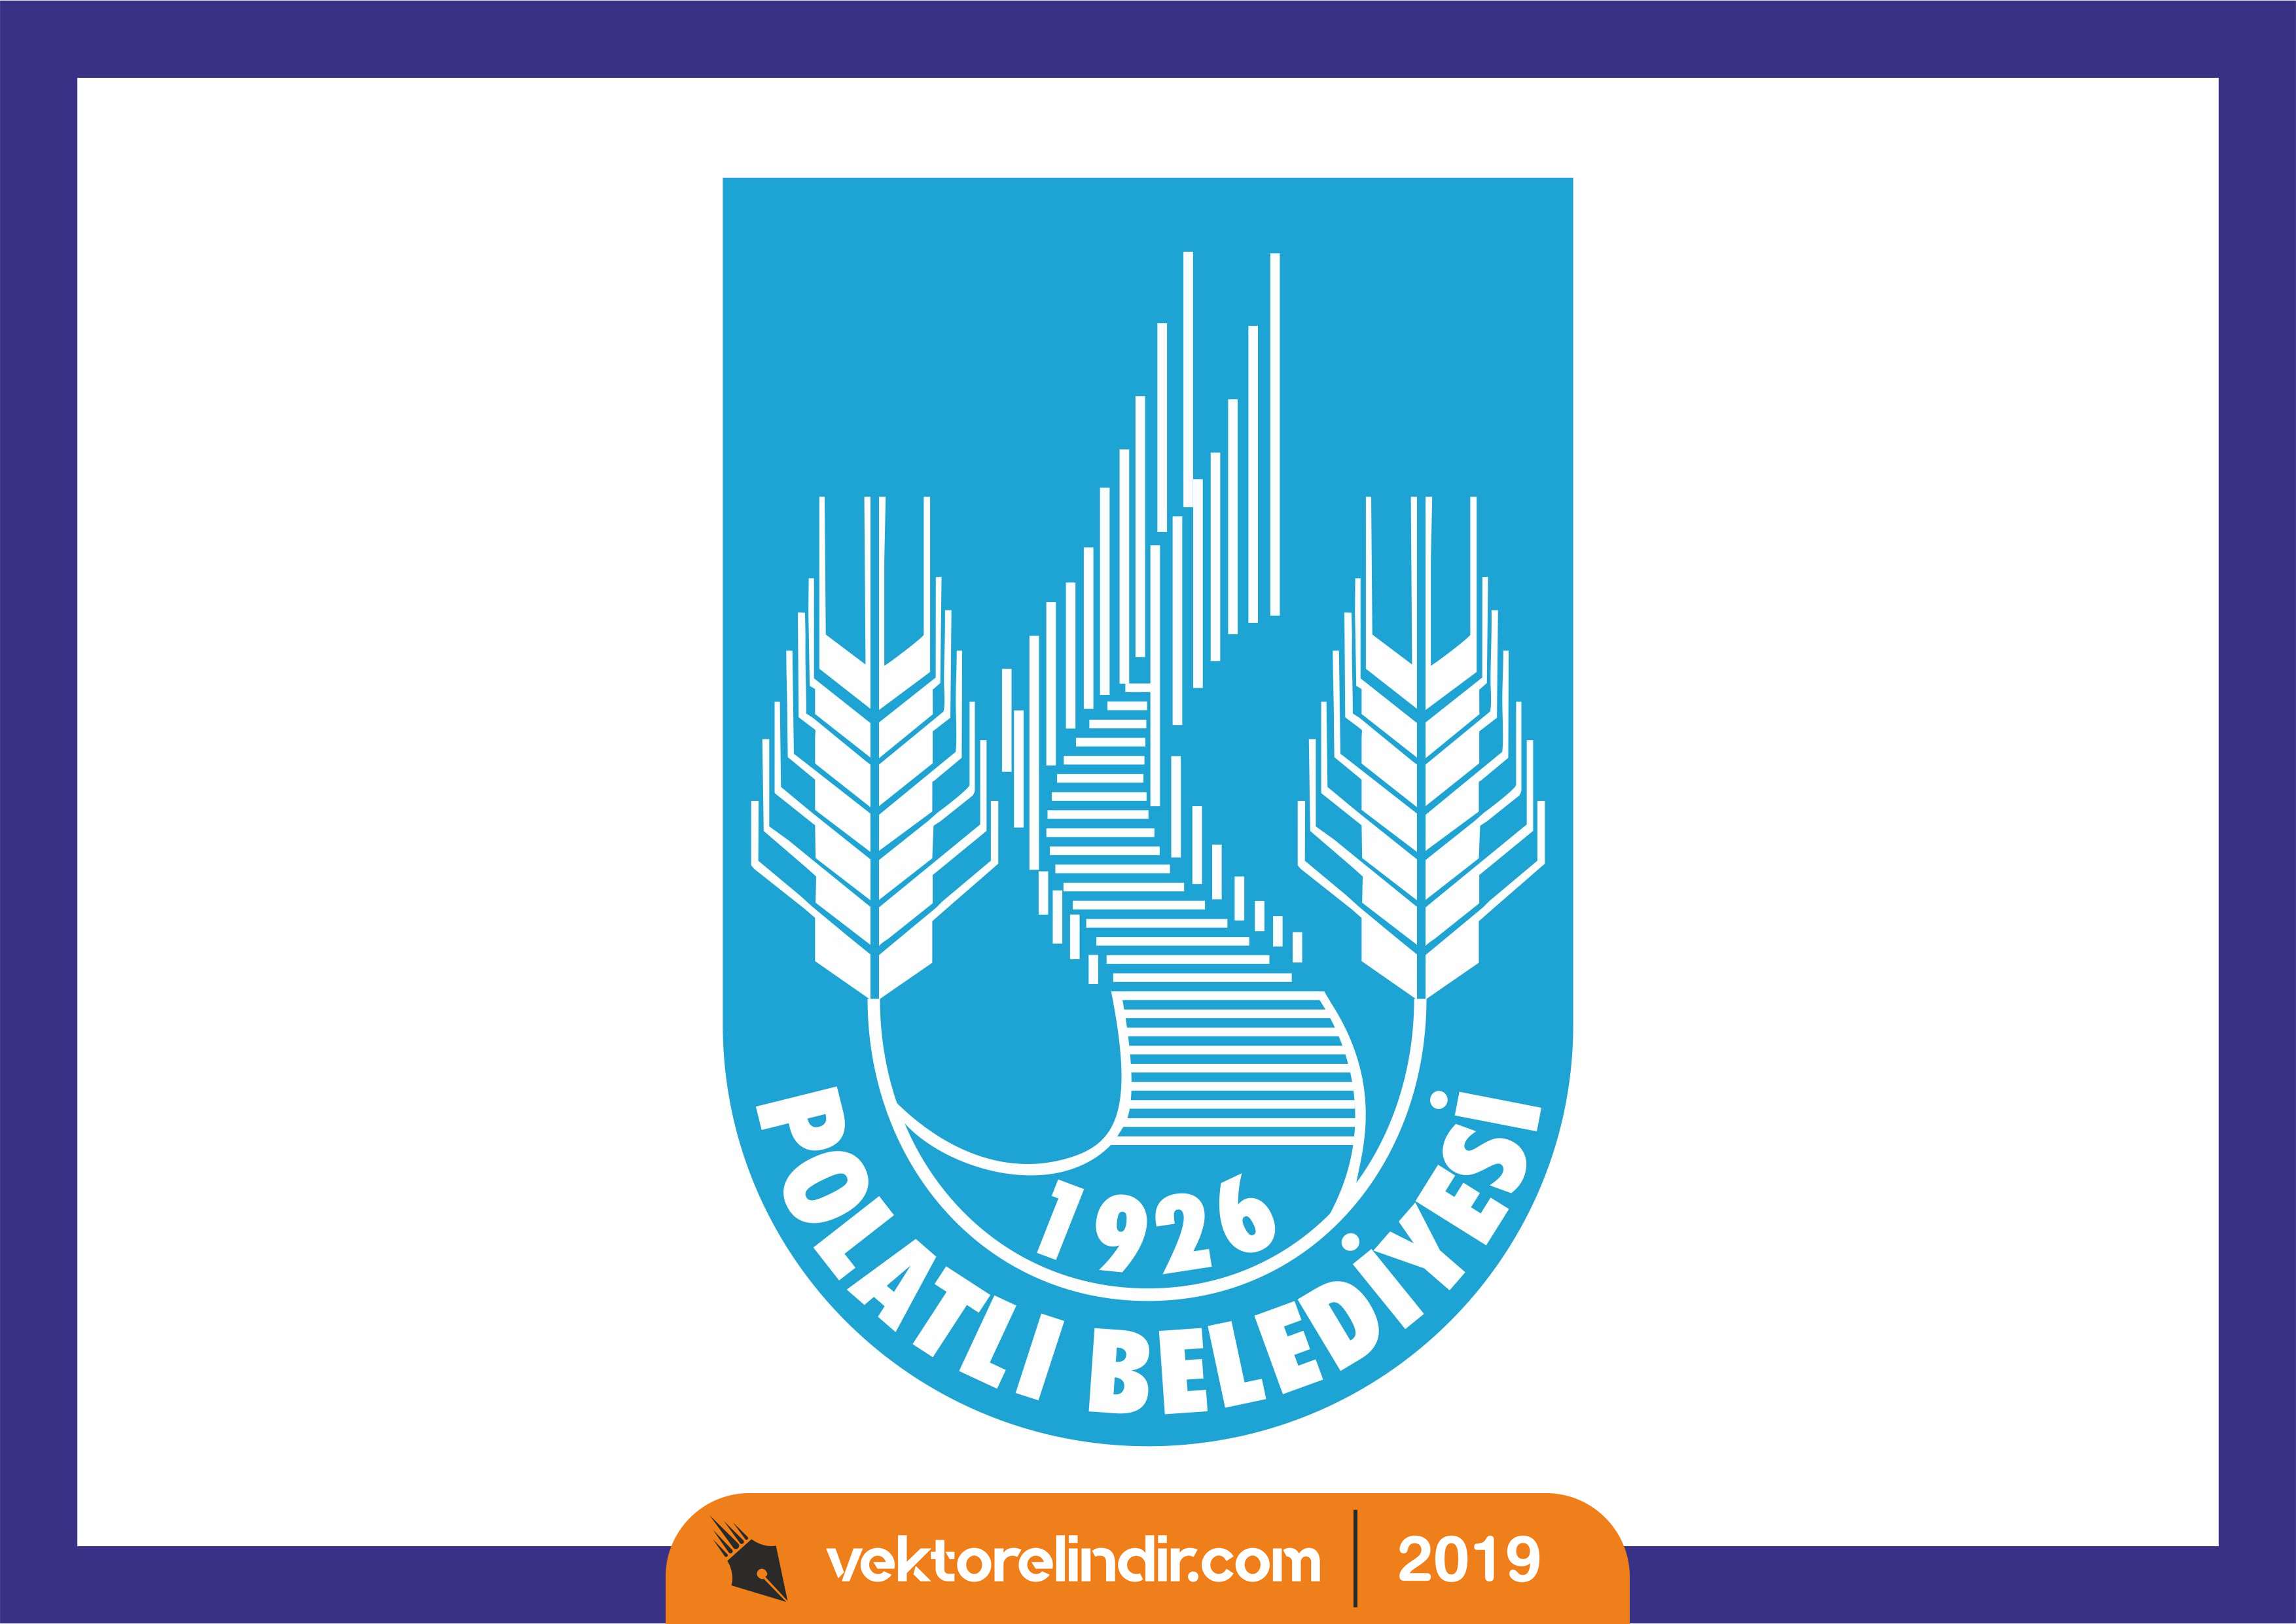 Polatlı Belediyesi Logo, Amblem